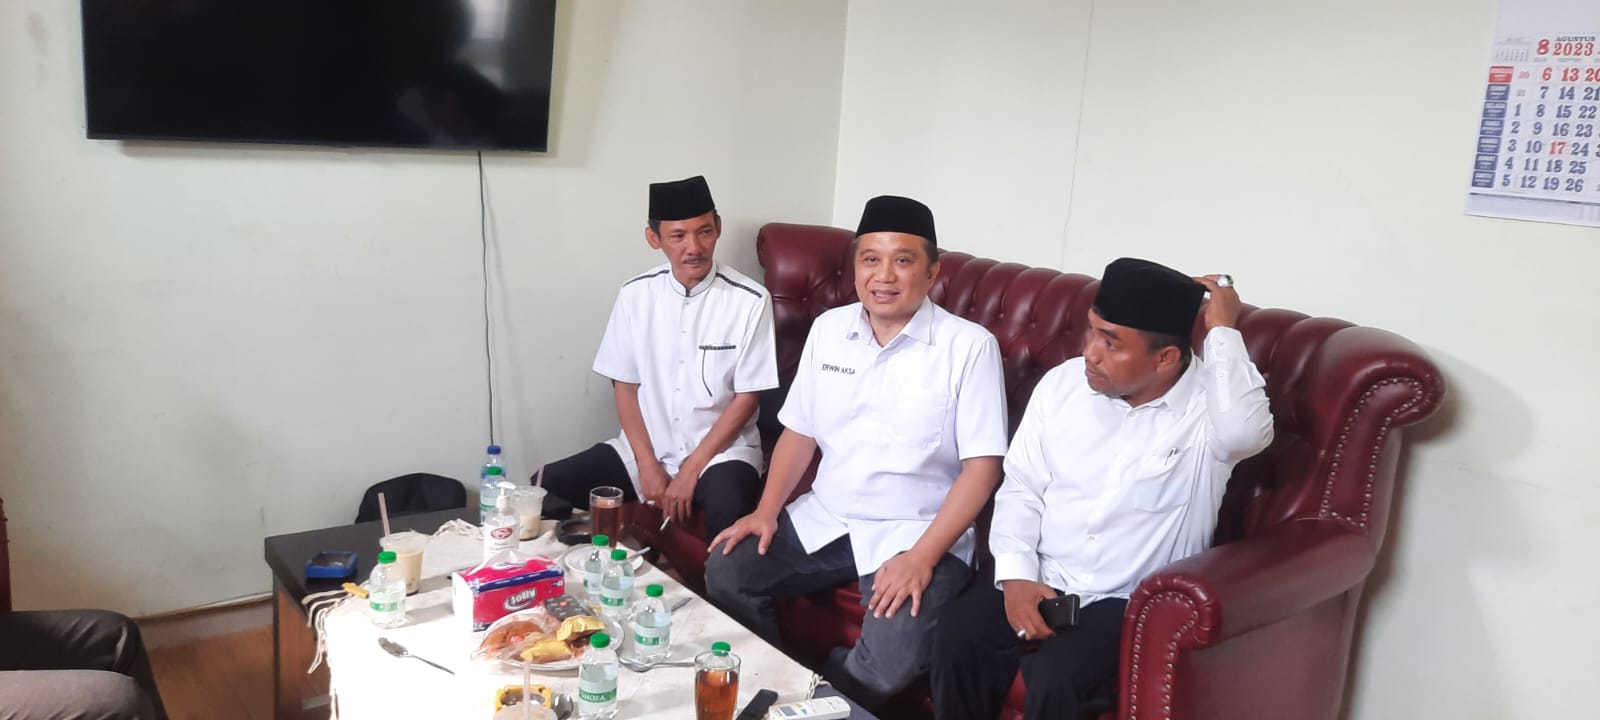 Erwin Aksa silaturahmi ke Kantor PWNU Jakarta 